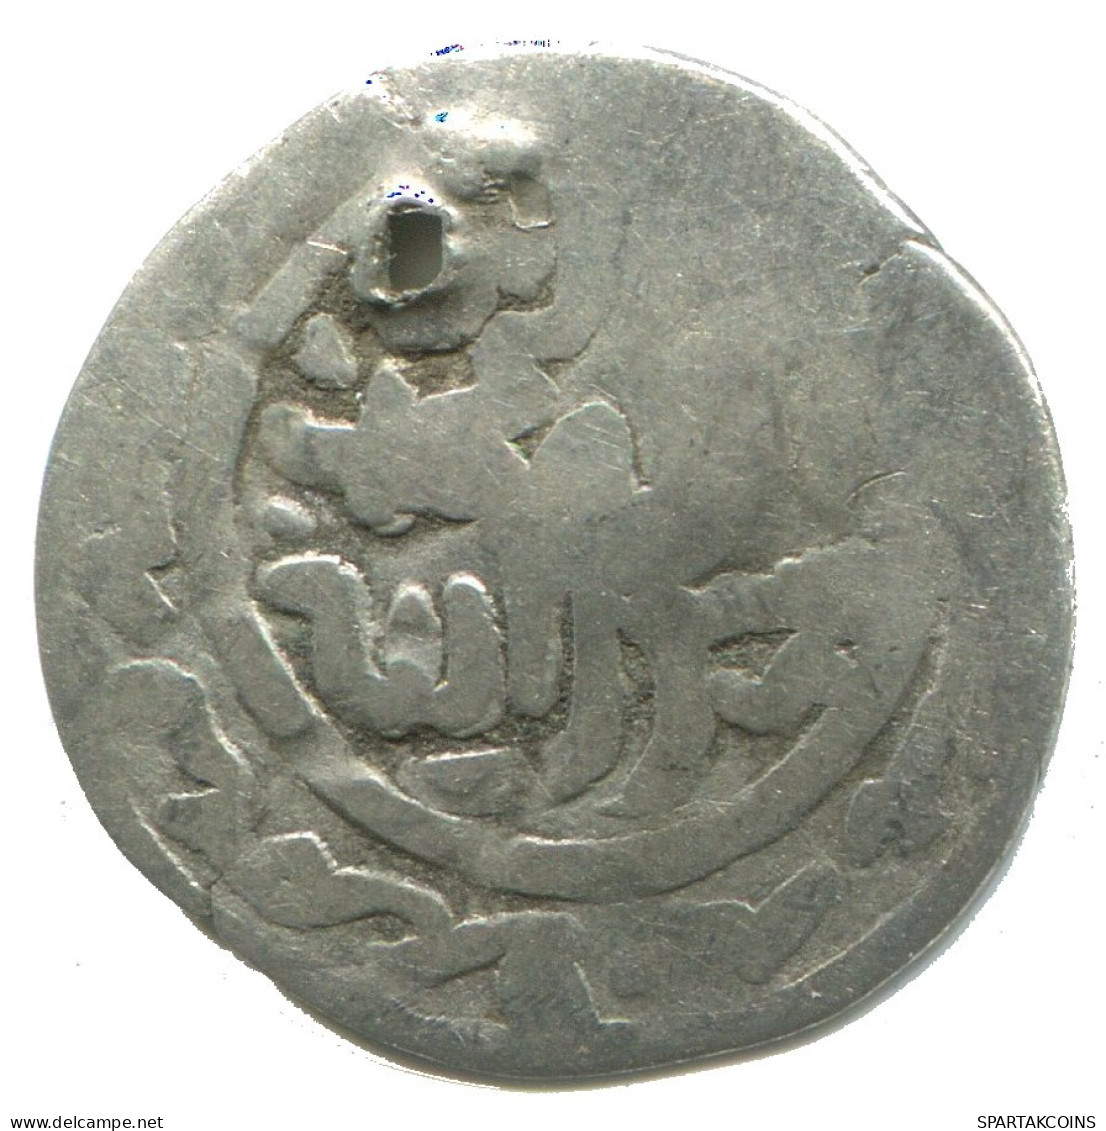 GOLDEN HORDE Silver Dirham Medieval Islamic Coin 1.1g/18mm #NNN1986.8.D.A - Islámicas